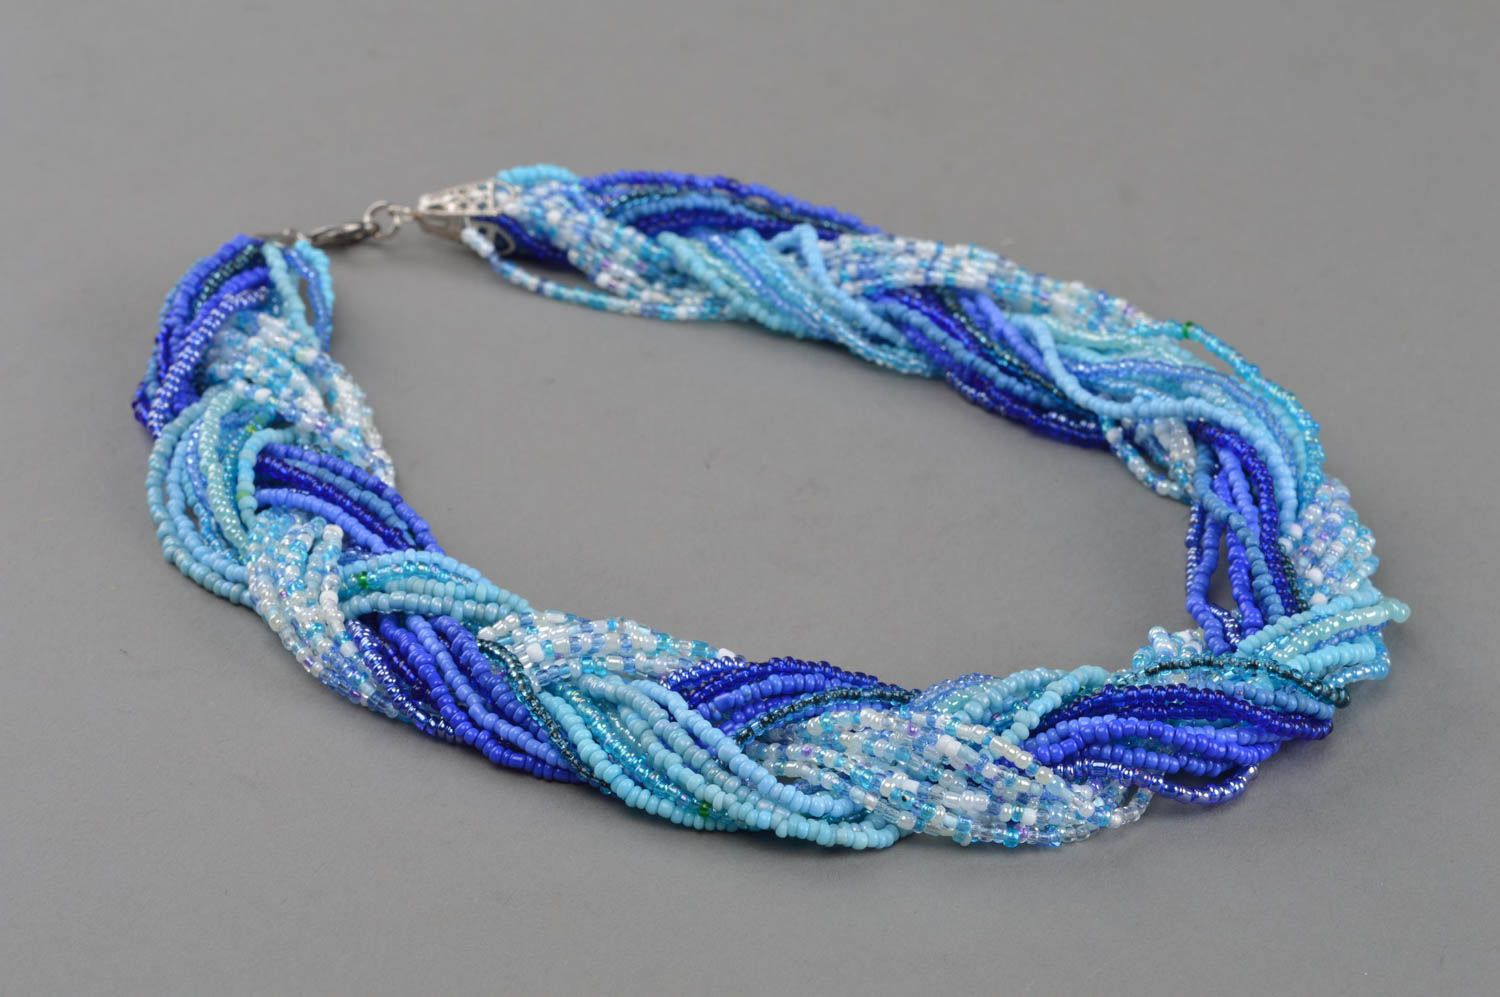 Beaded necklace handmade woven collar braided accessory evening jewelry photo 2